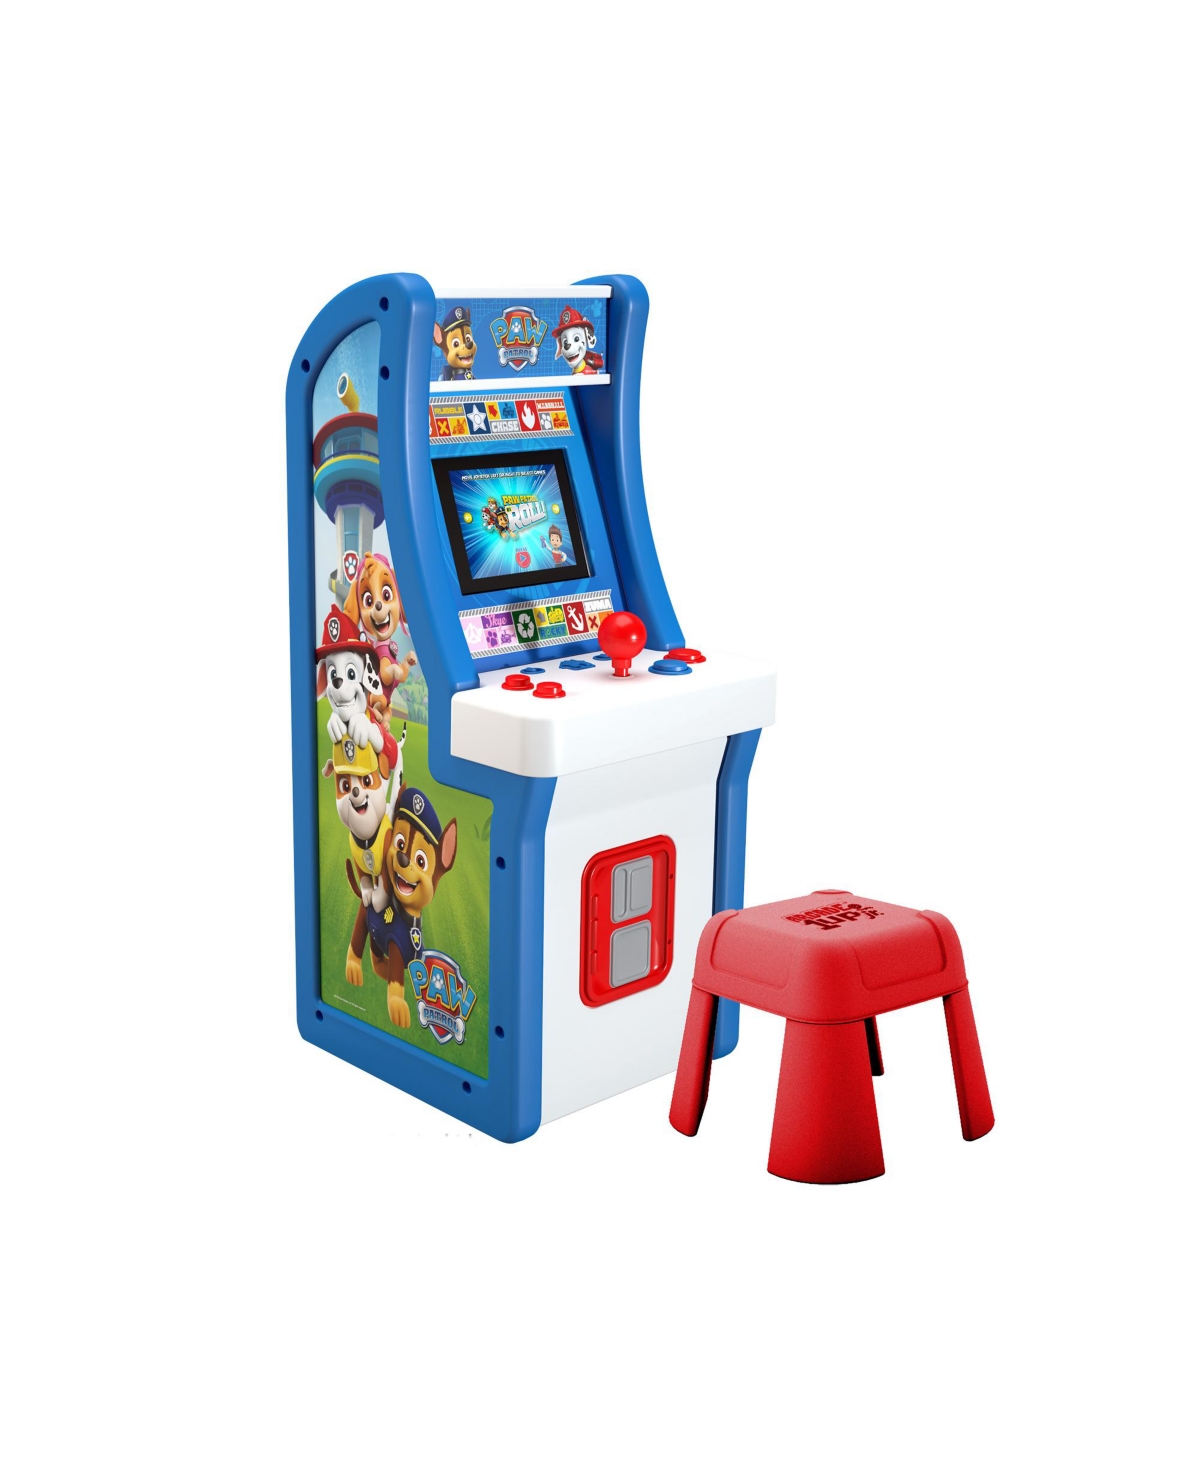 14369326 Arcade 1 Up Paw Patrol Jr. Arcade, 4-Player Game,  sku 14369326